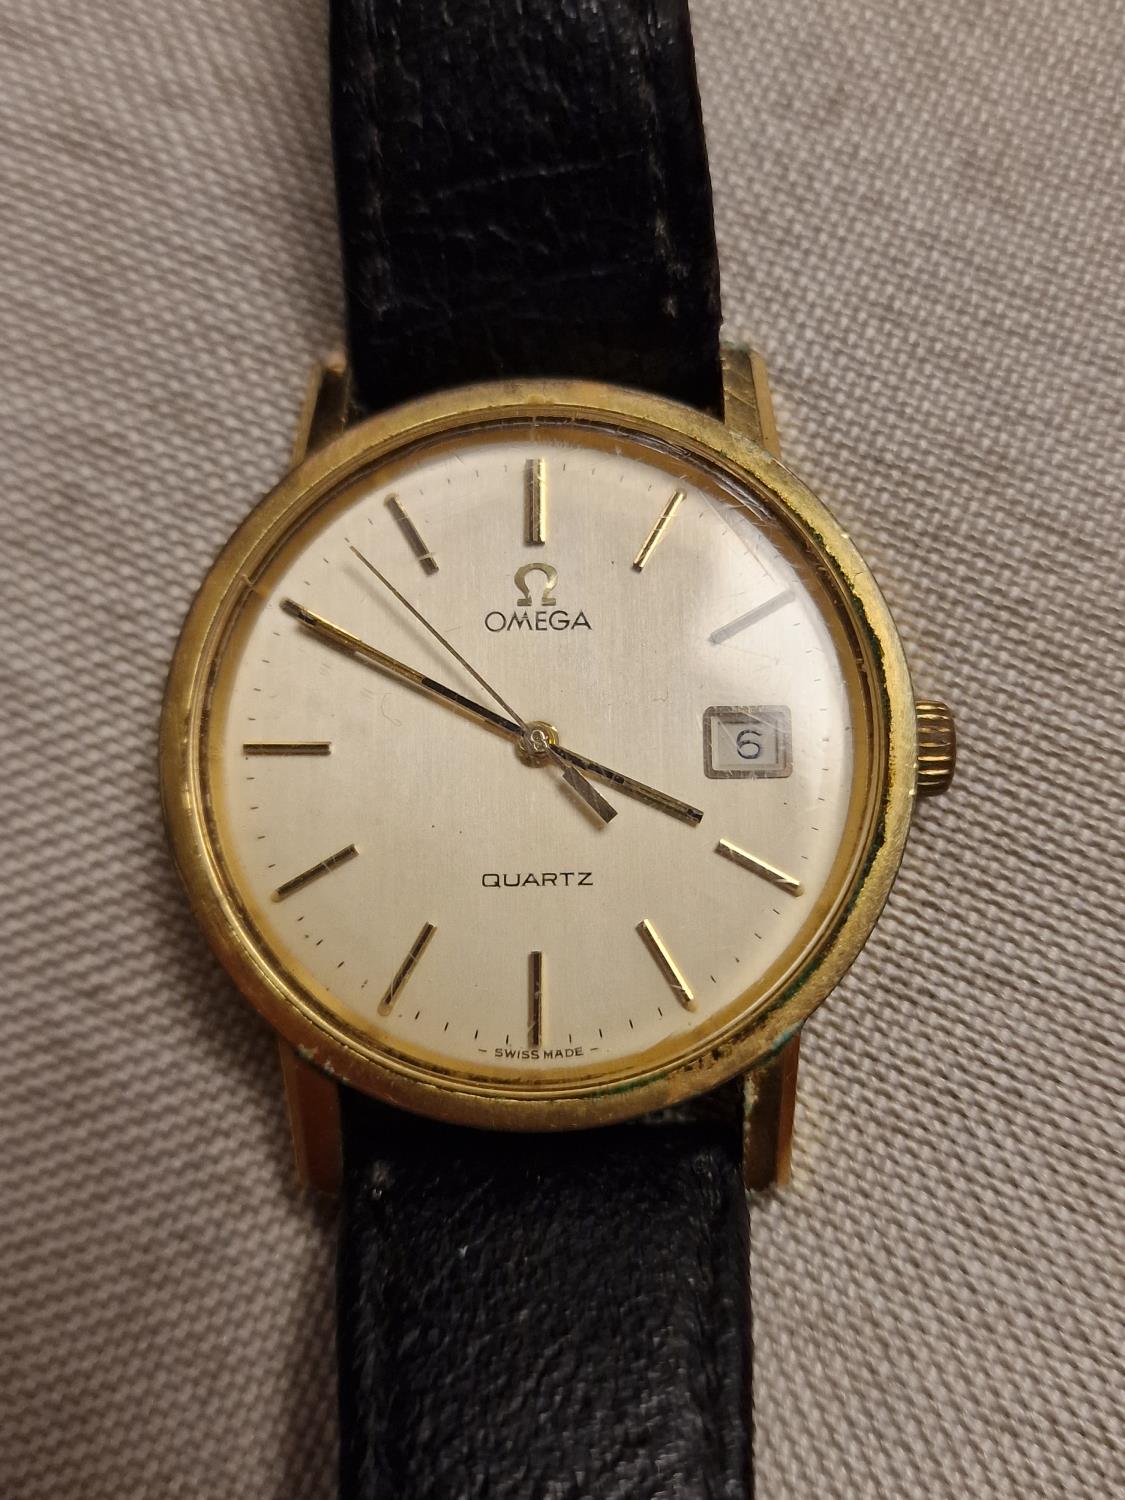 Omega Quartz Swiss Wrist Watch - Image 2 of 6